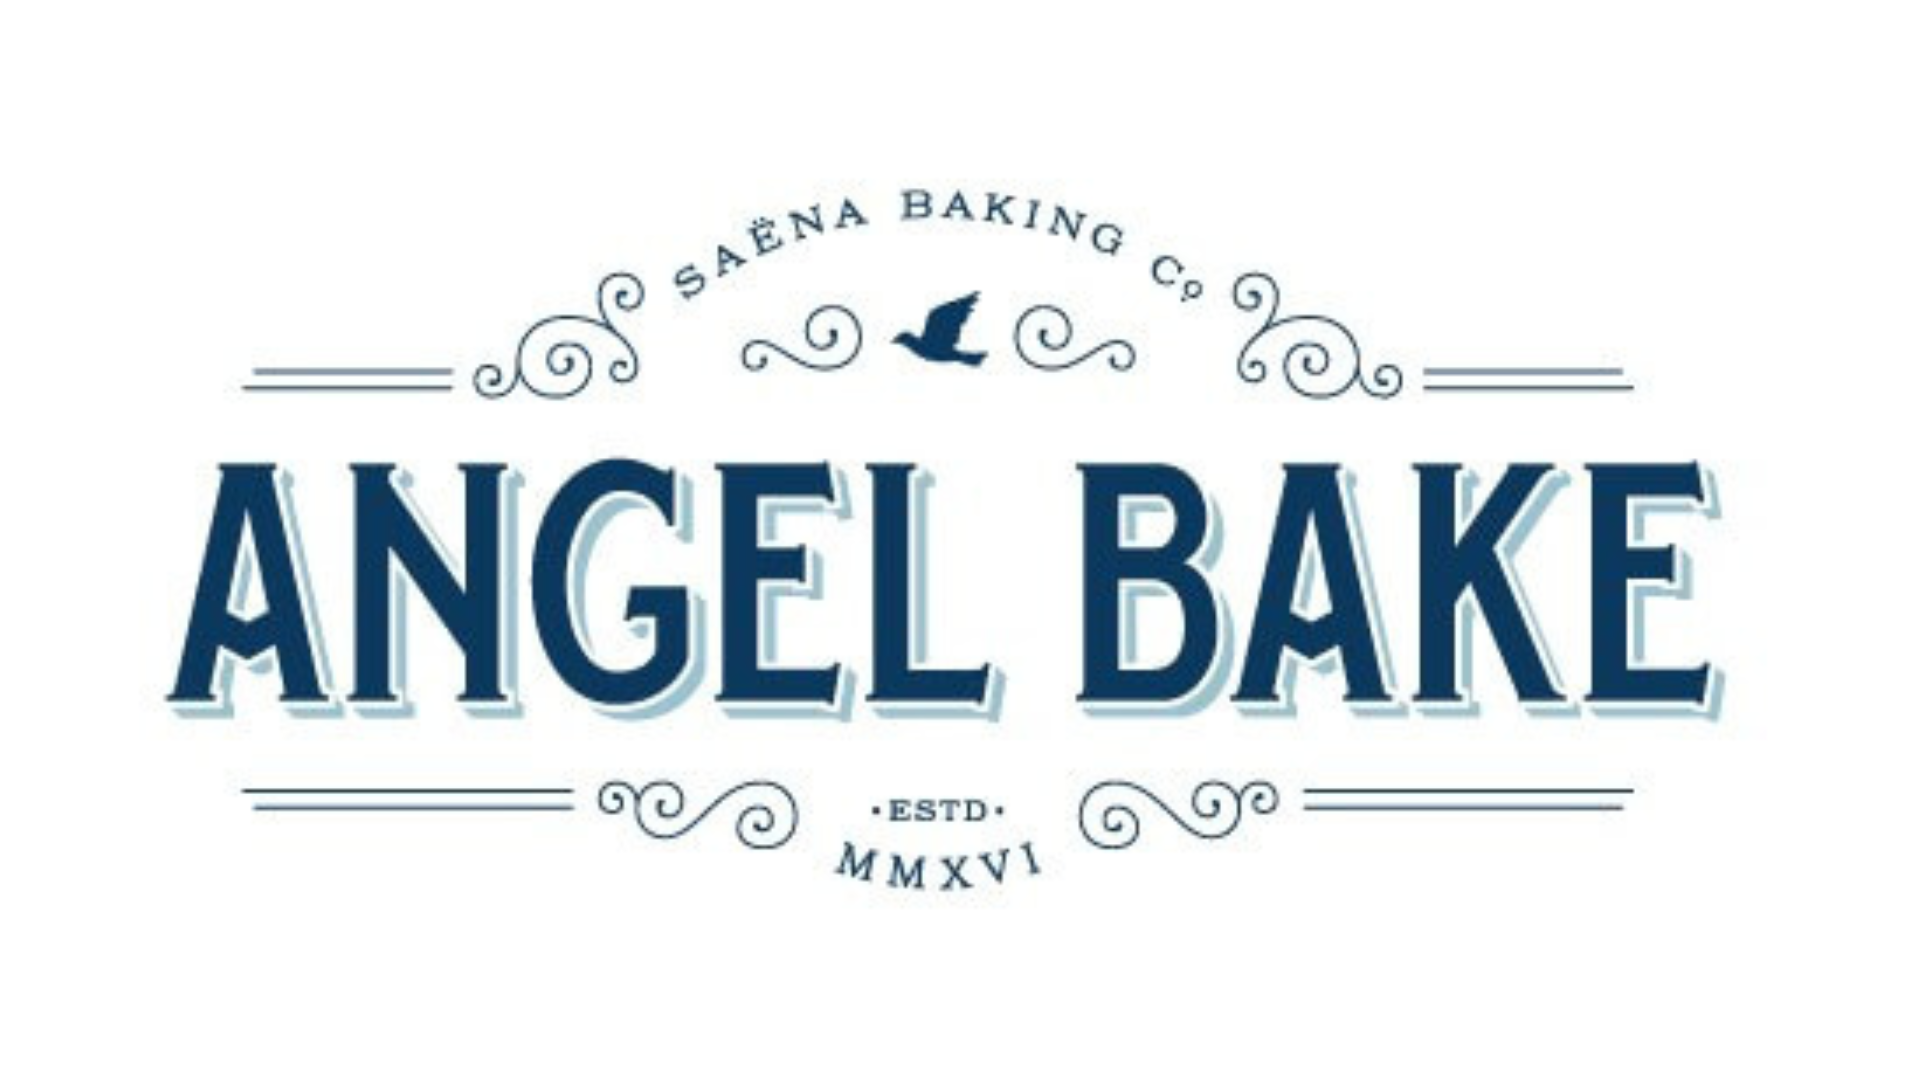 Angel Bake